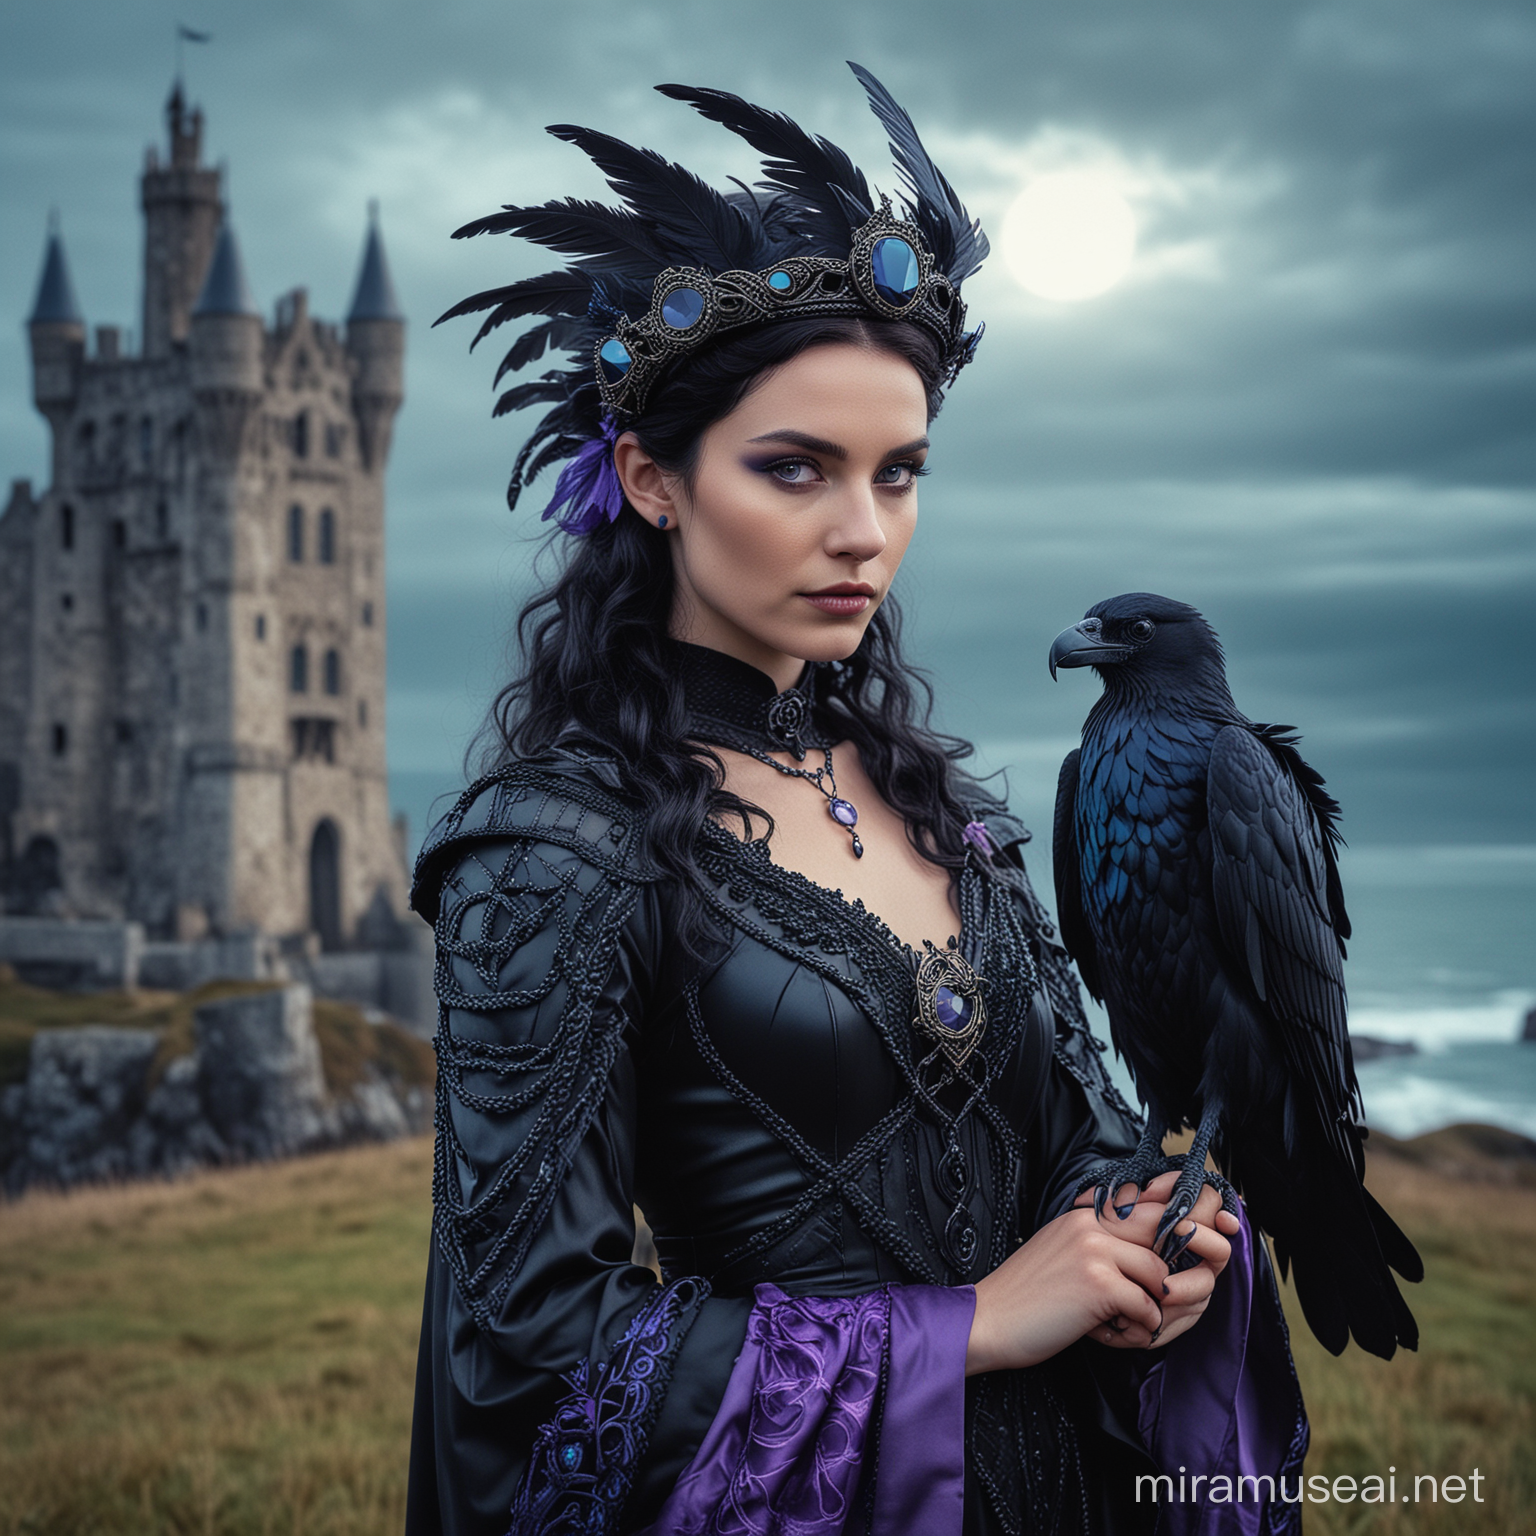 Enchanting Celtic Raven Queen with Dragon in a Violet Castle Landscape